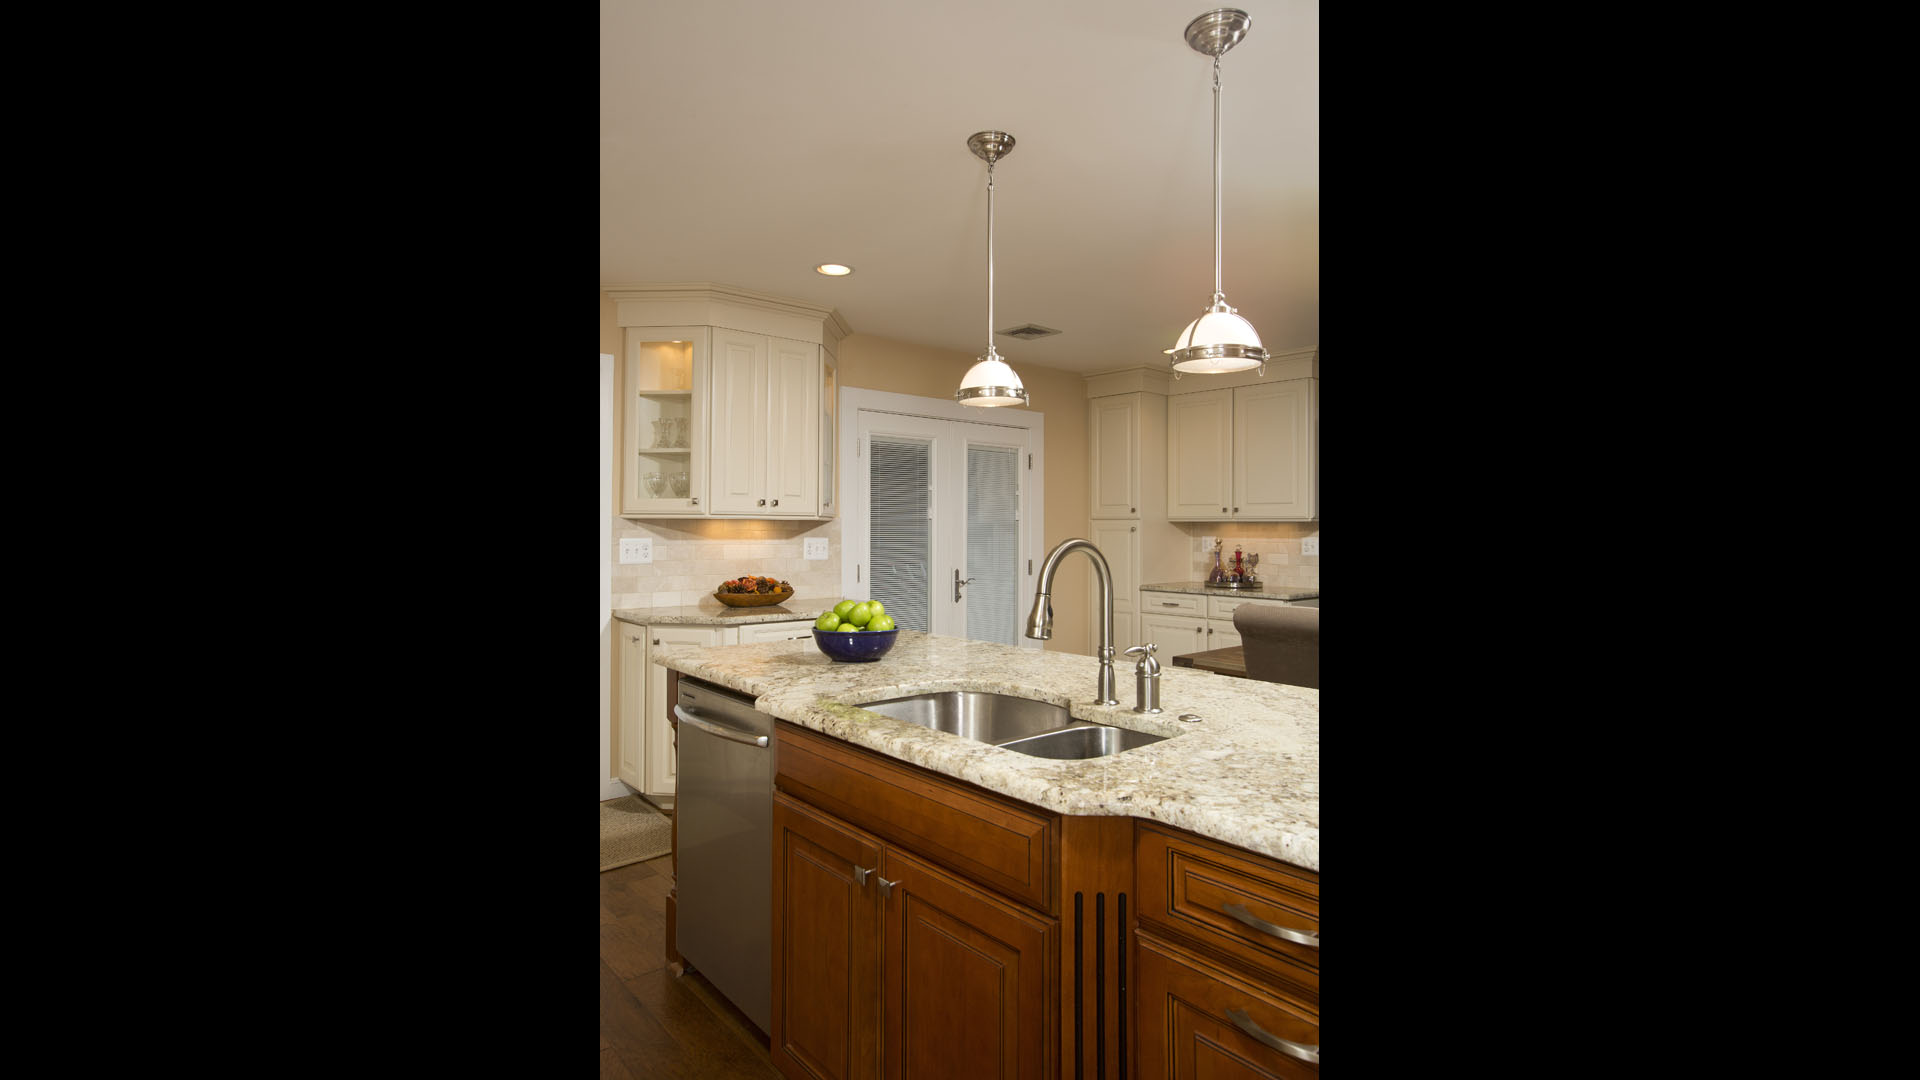 2015 Chrysalis Award South Region Winner, Residential Kitchen Remodel $50,000 – $75,000